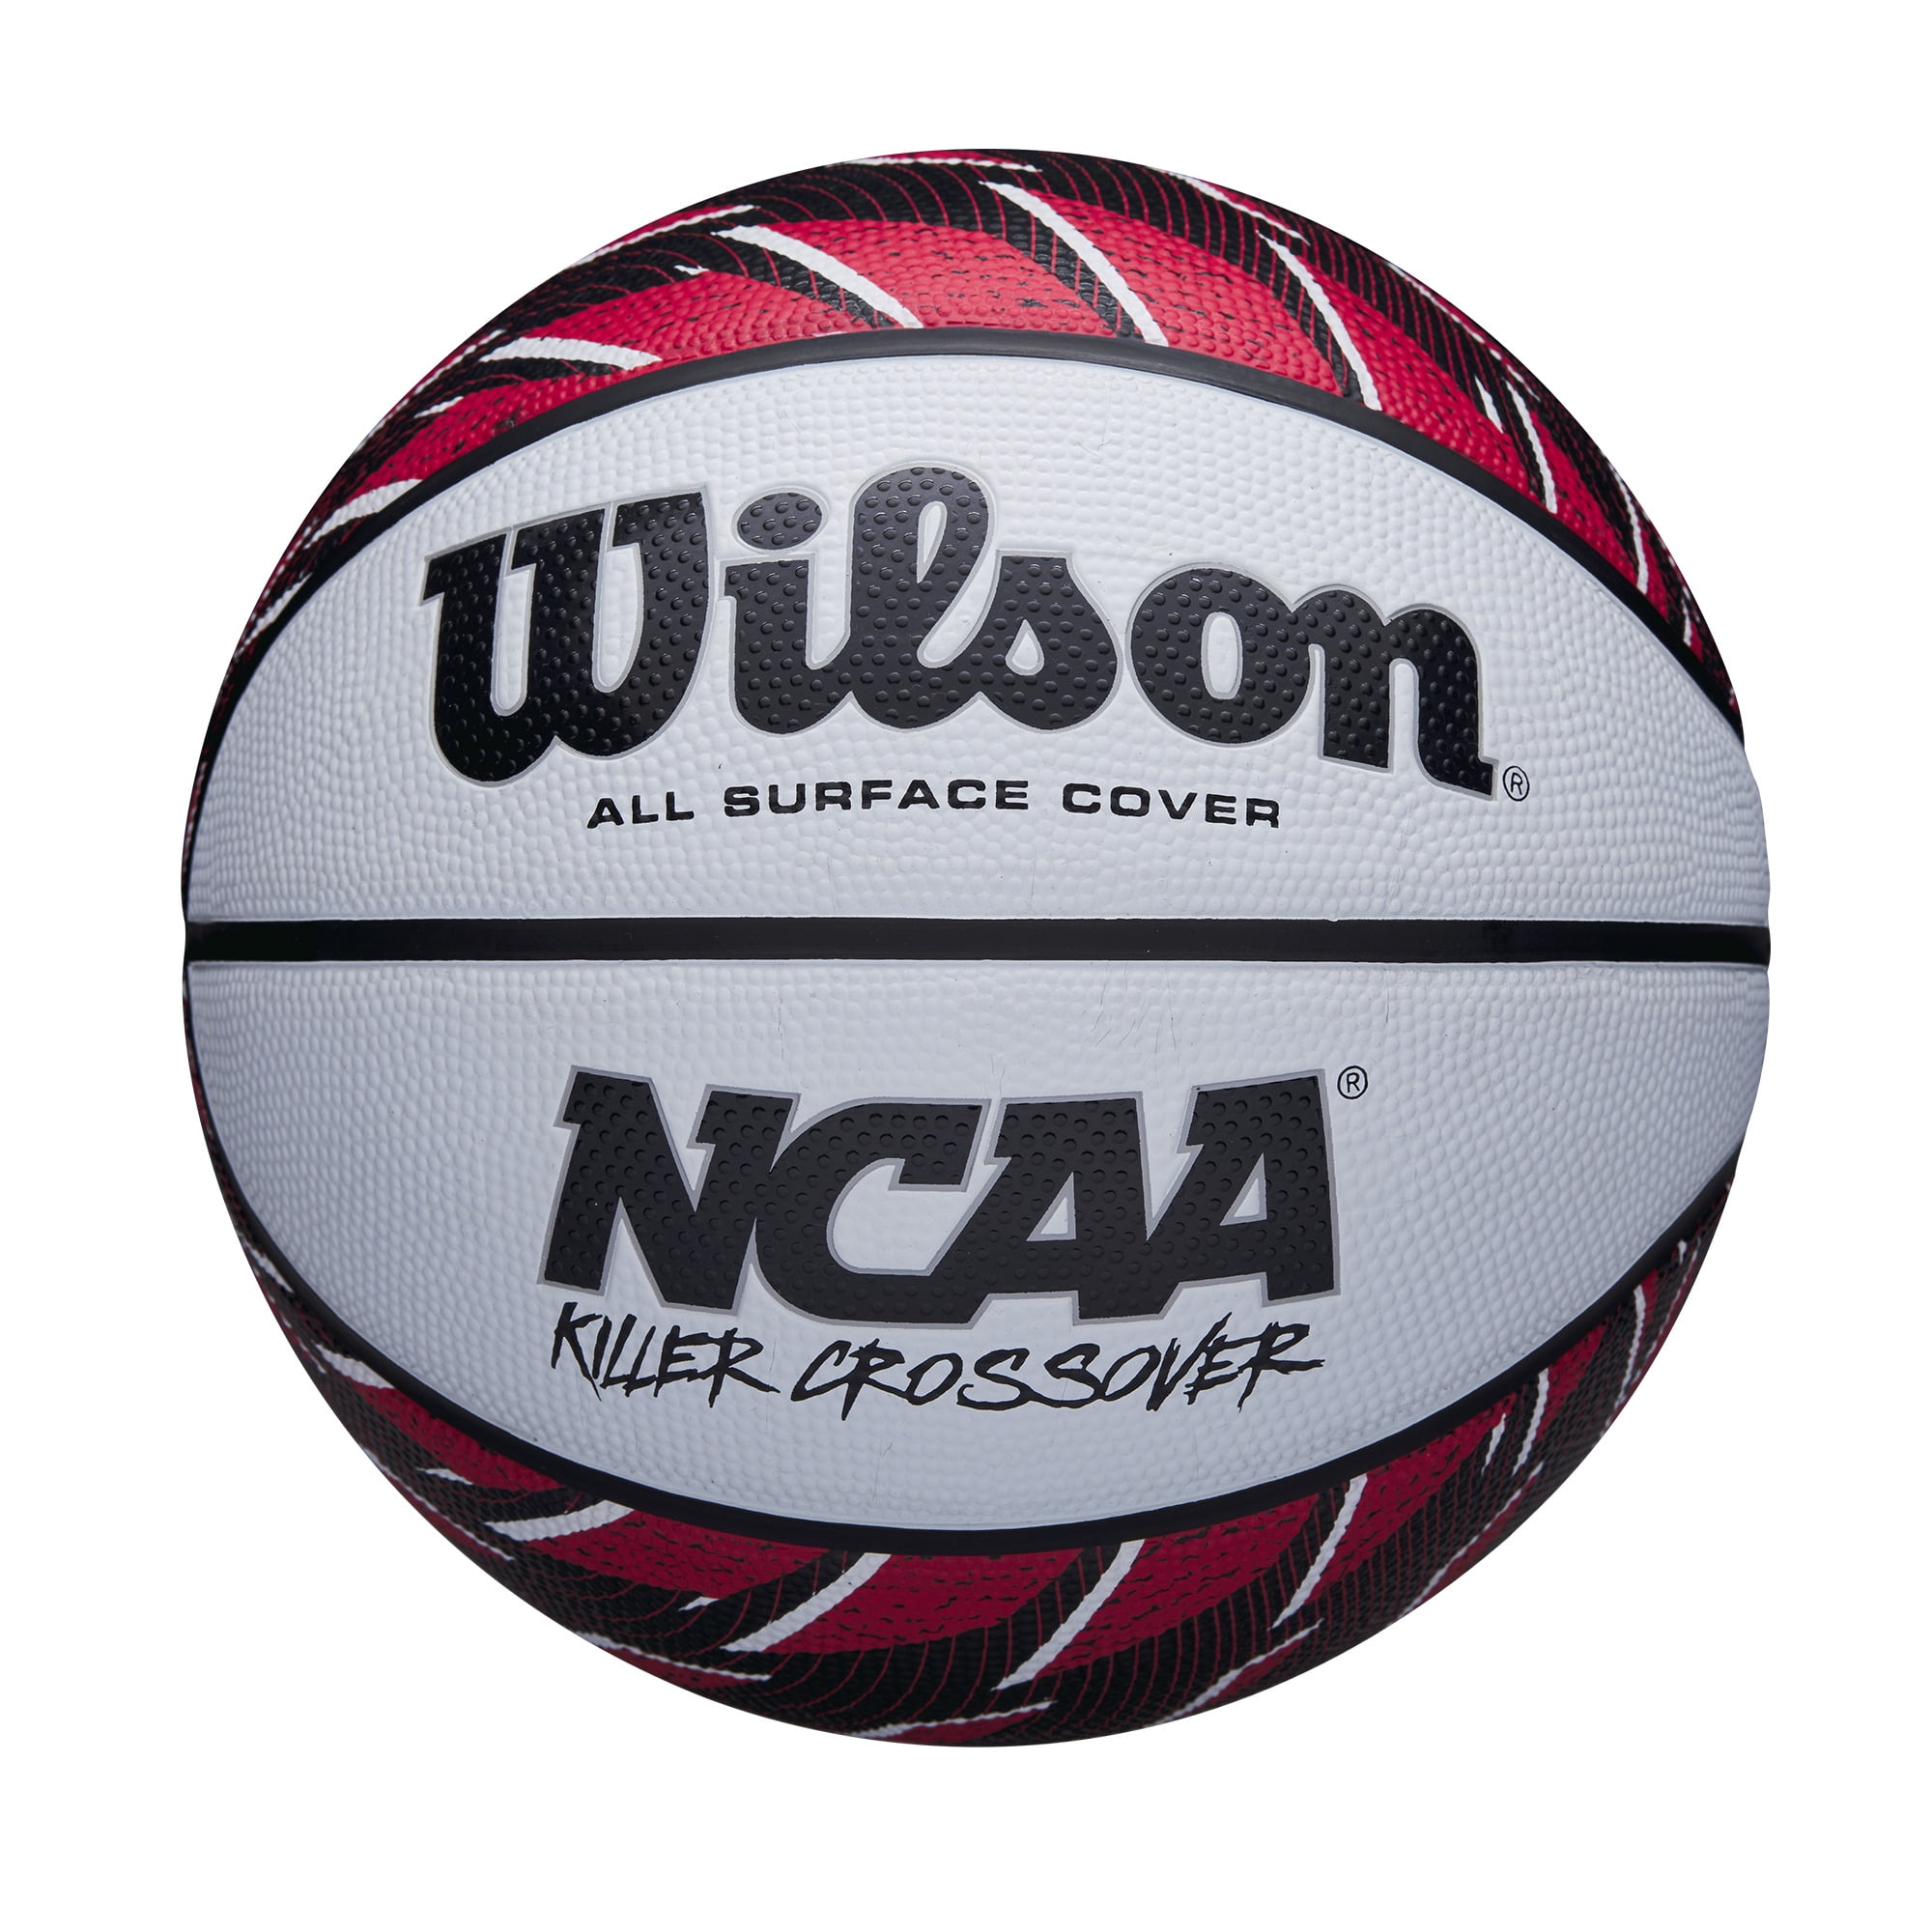 Wilson NCAA Killer Crossover Basketball, Official Size - 29.5 